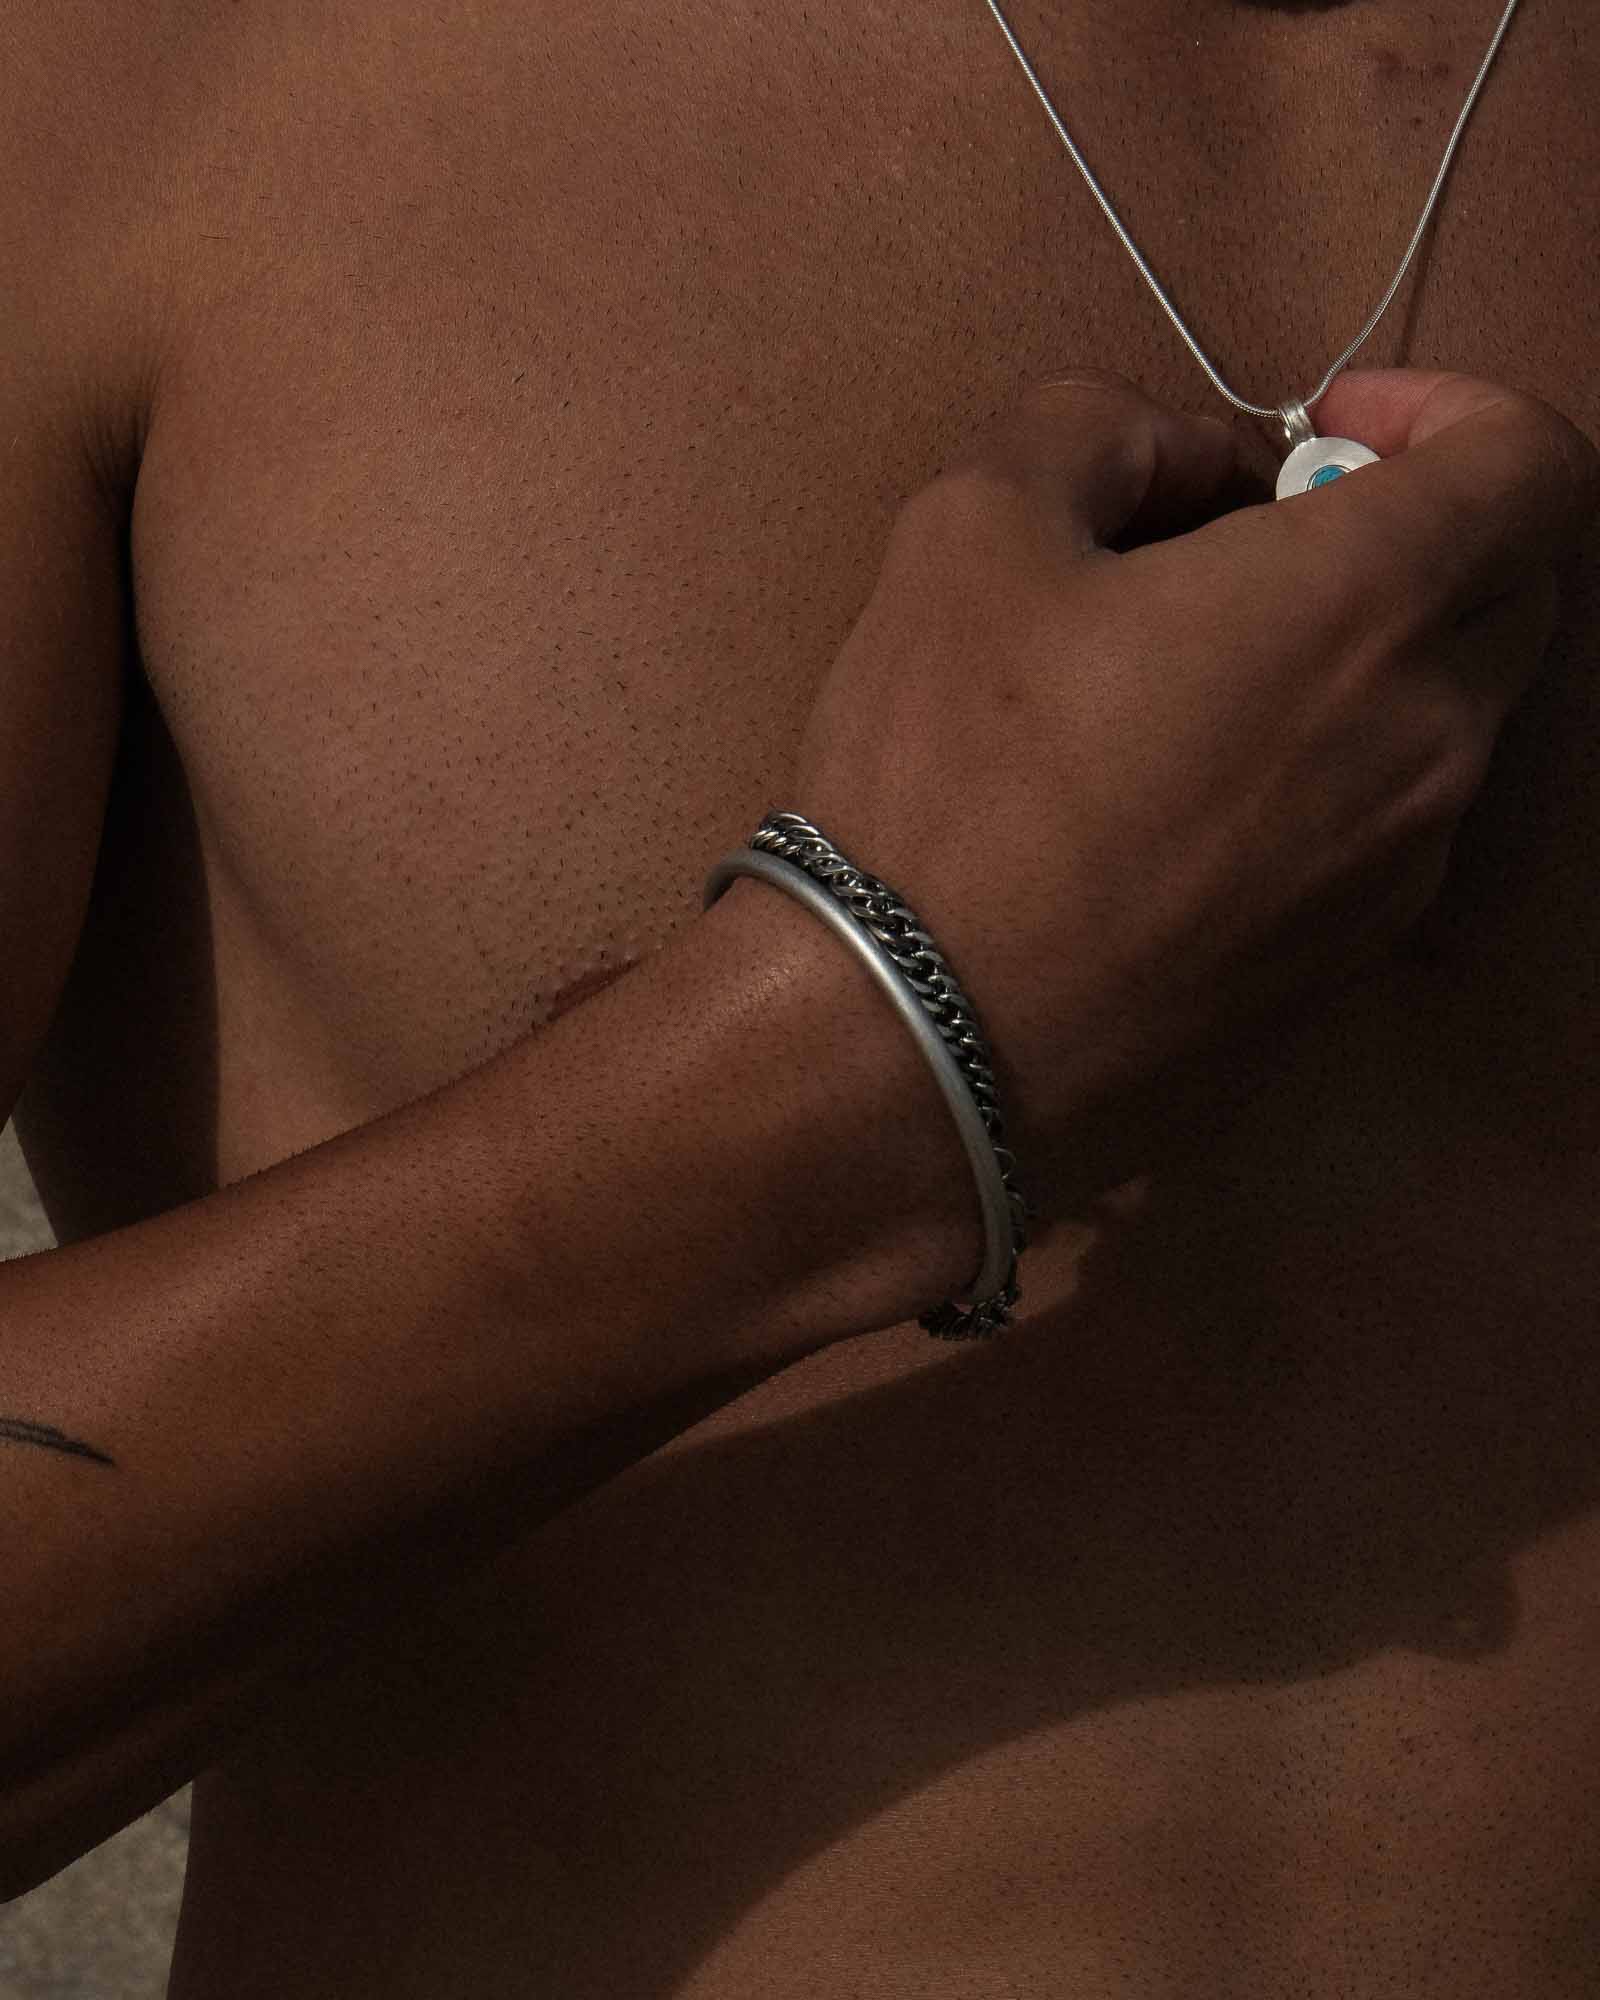 Portofino bracelet placed on the model's wrist